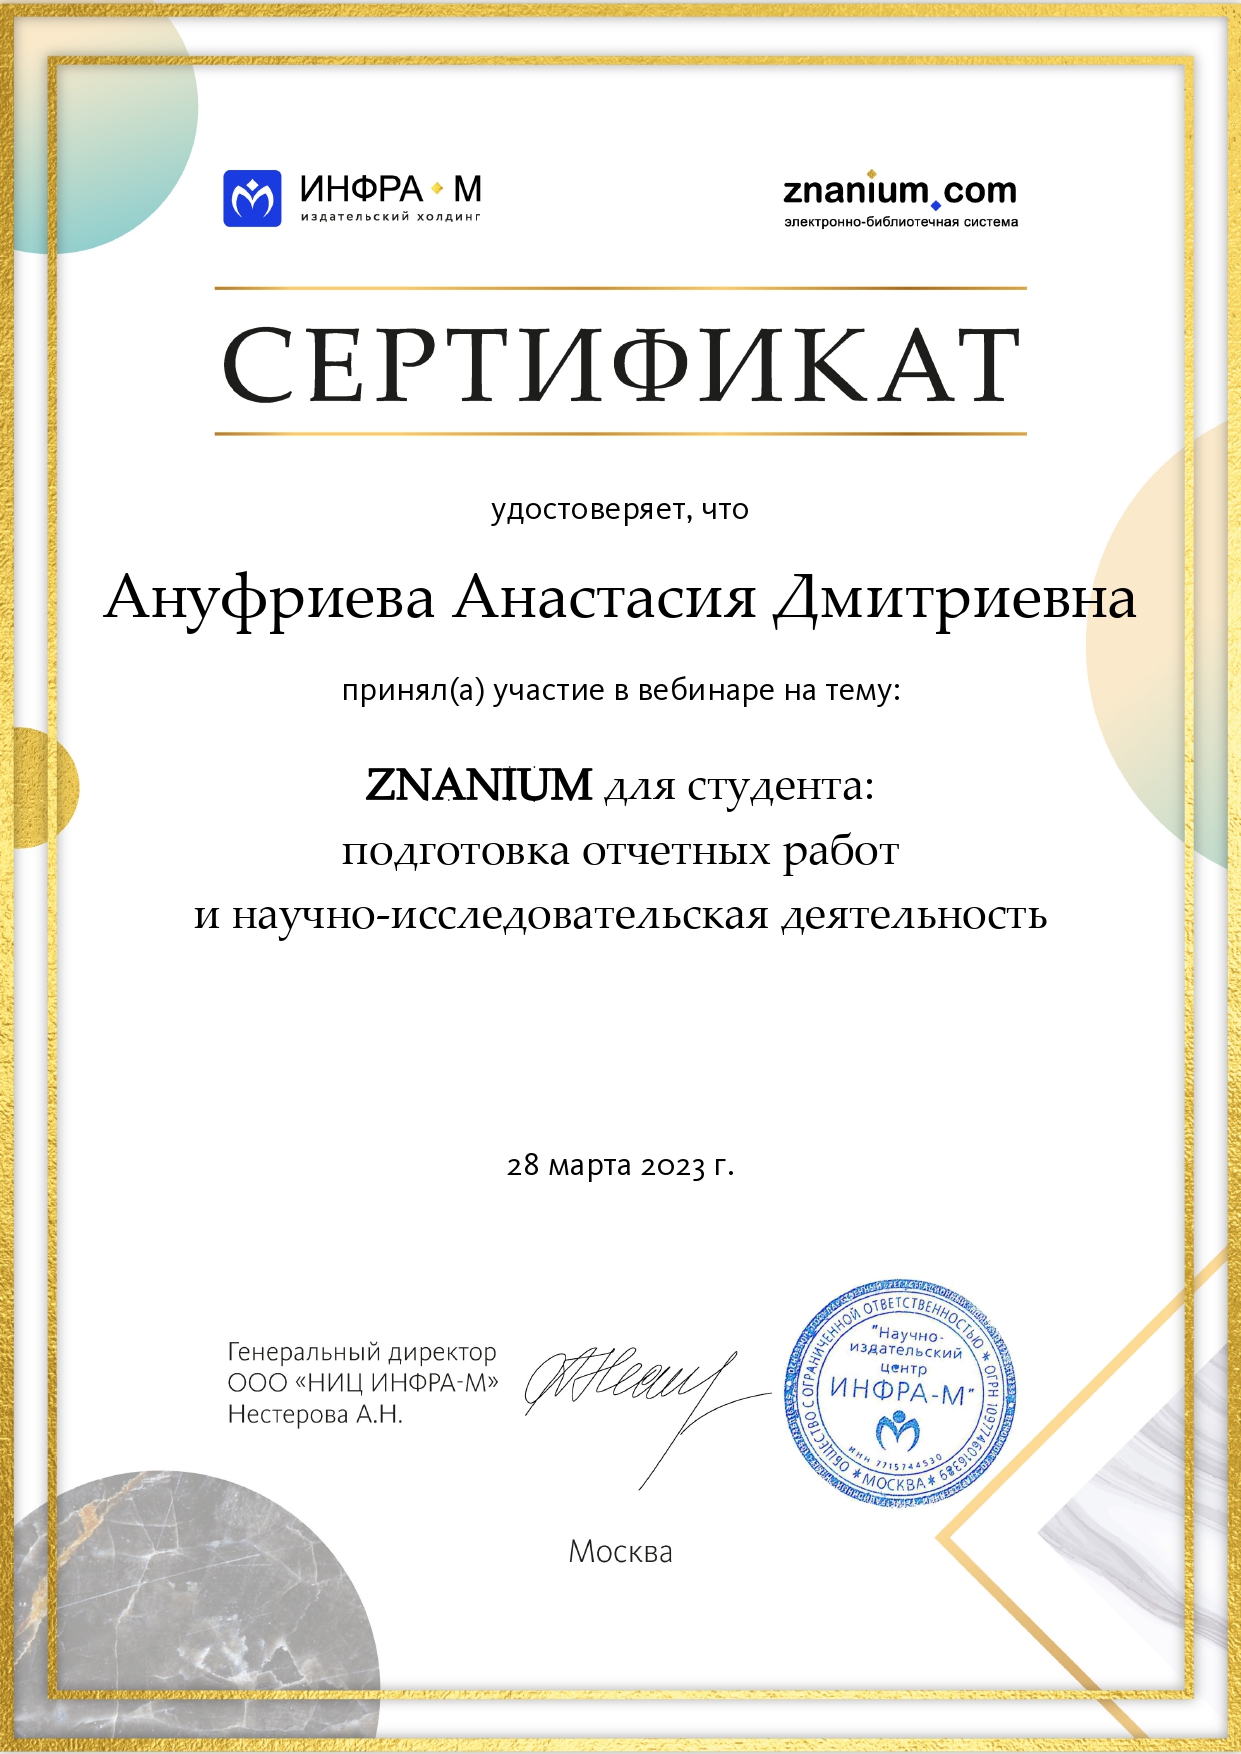 сертификат знаниум_page-0001.jpg